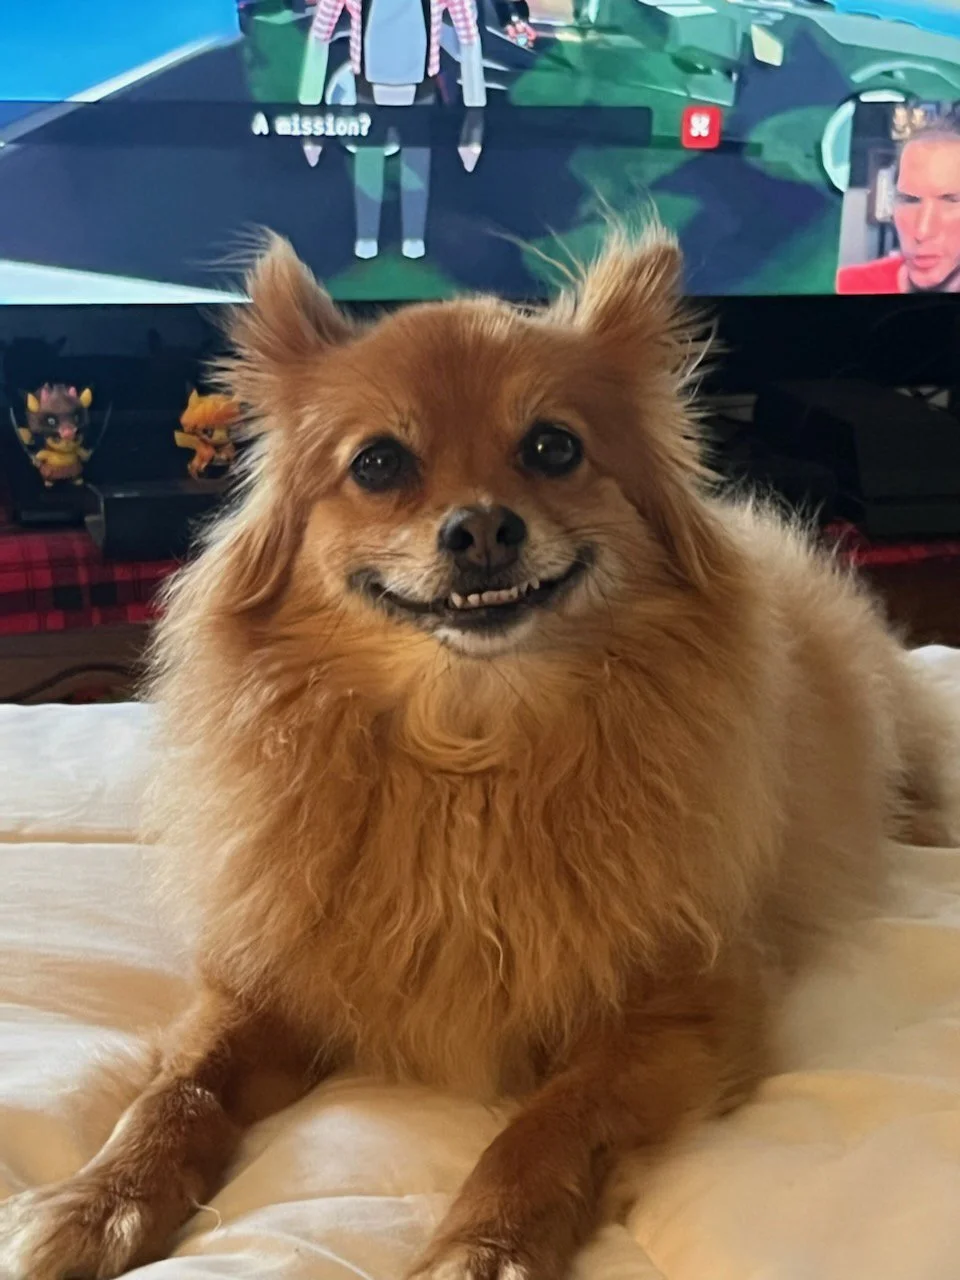 This grinning Pomeranian